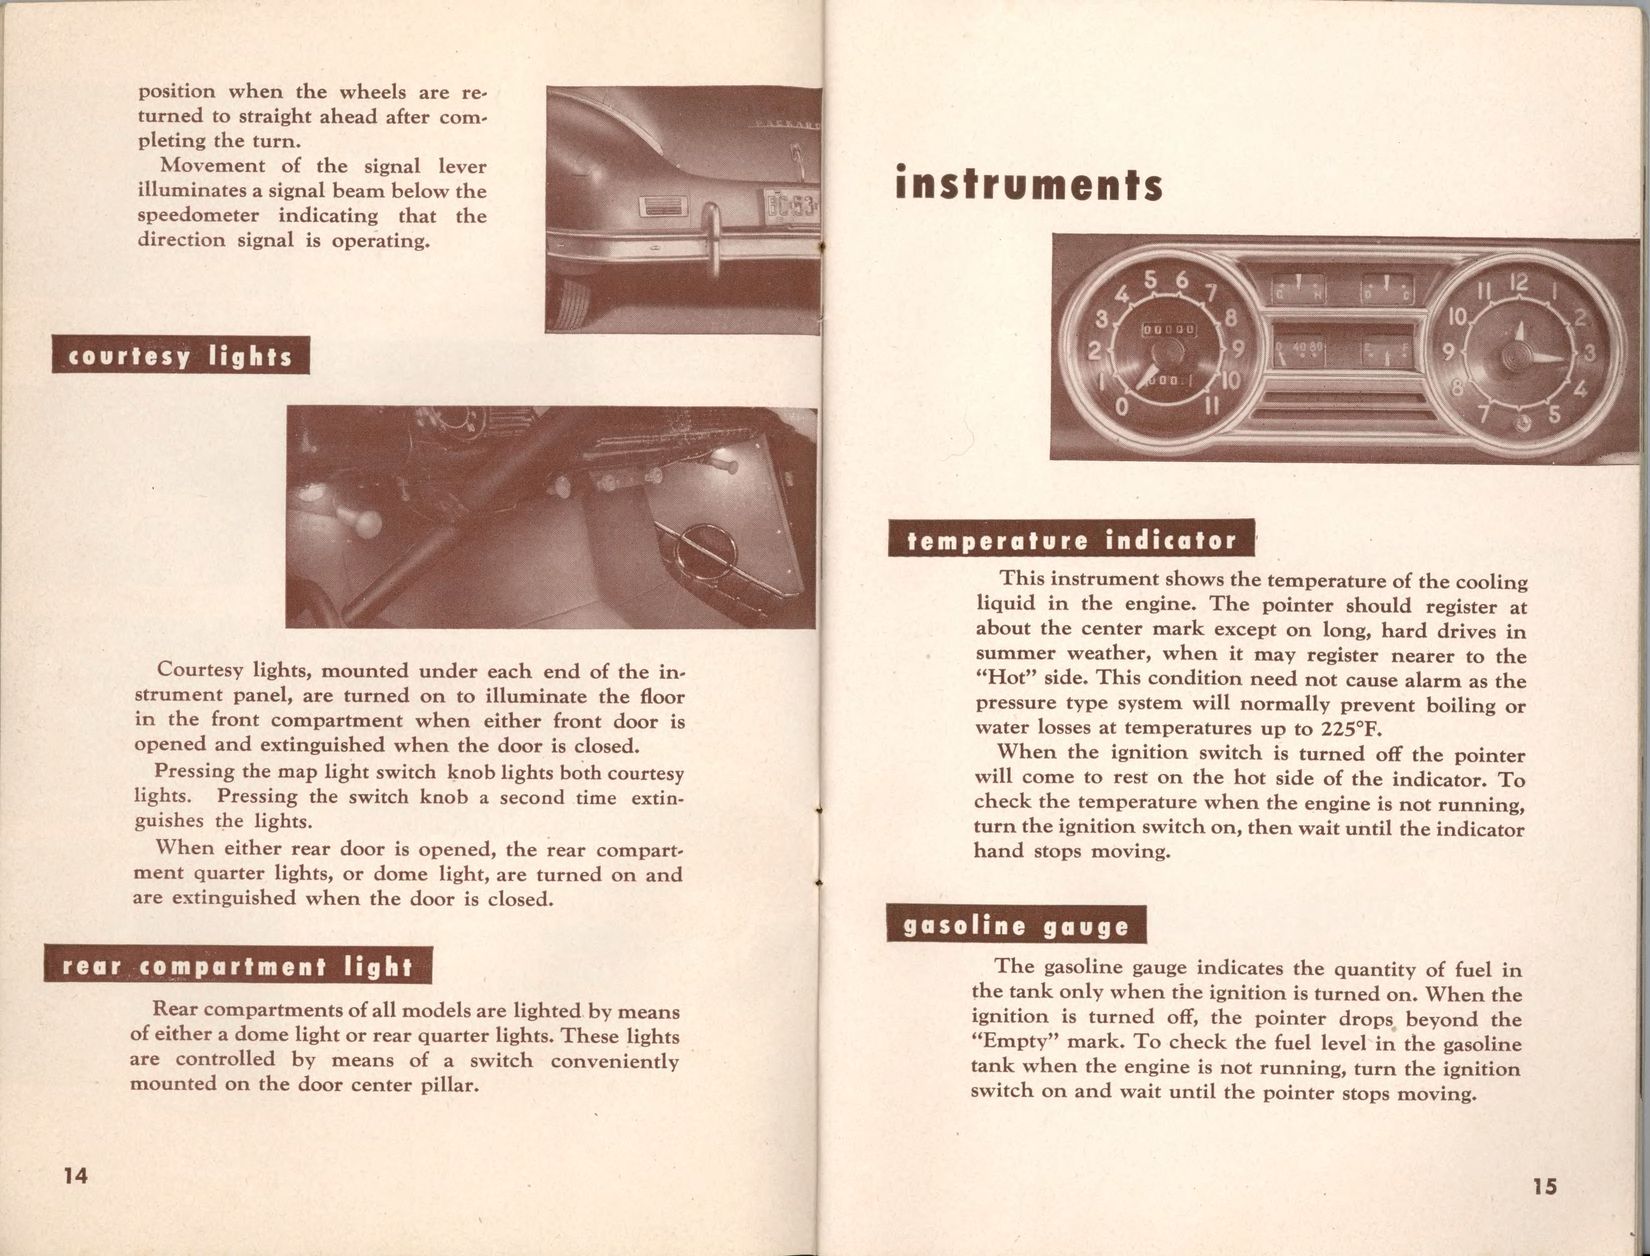 1948 Packard Manual-14-15